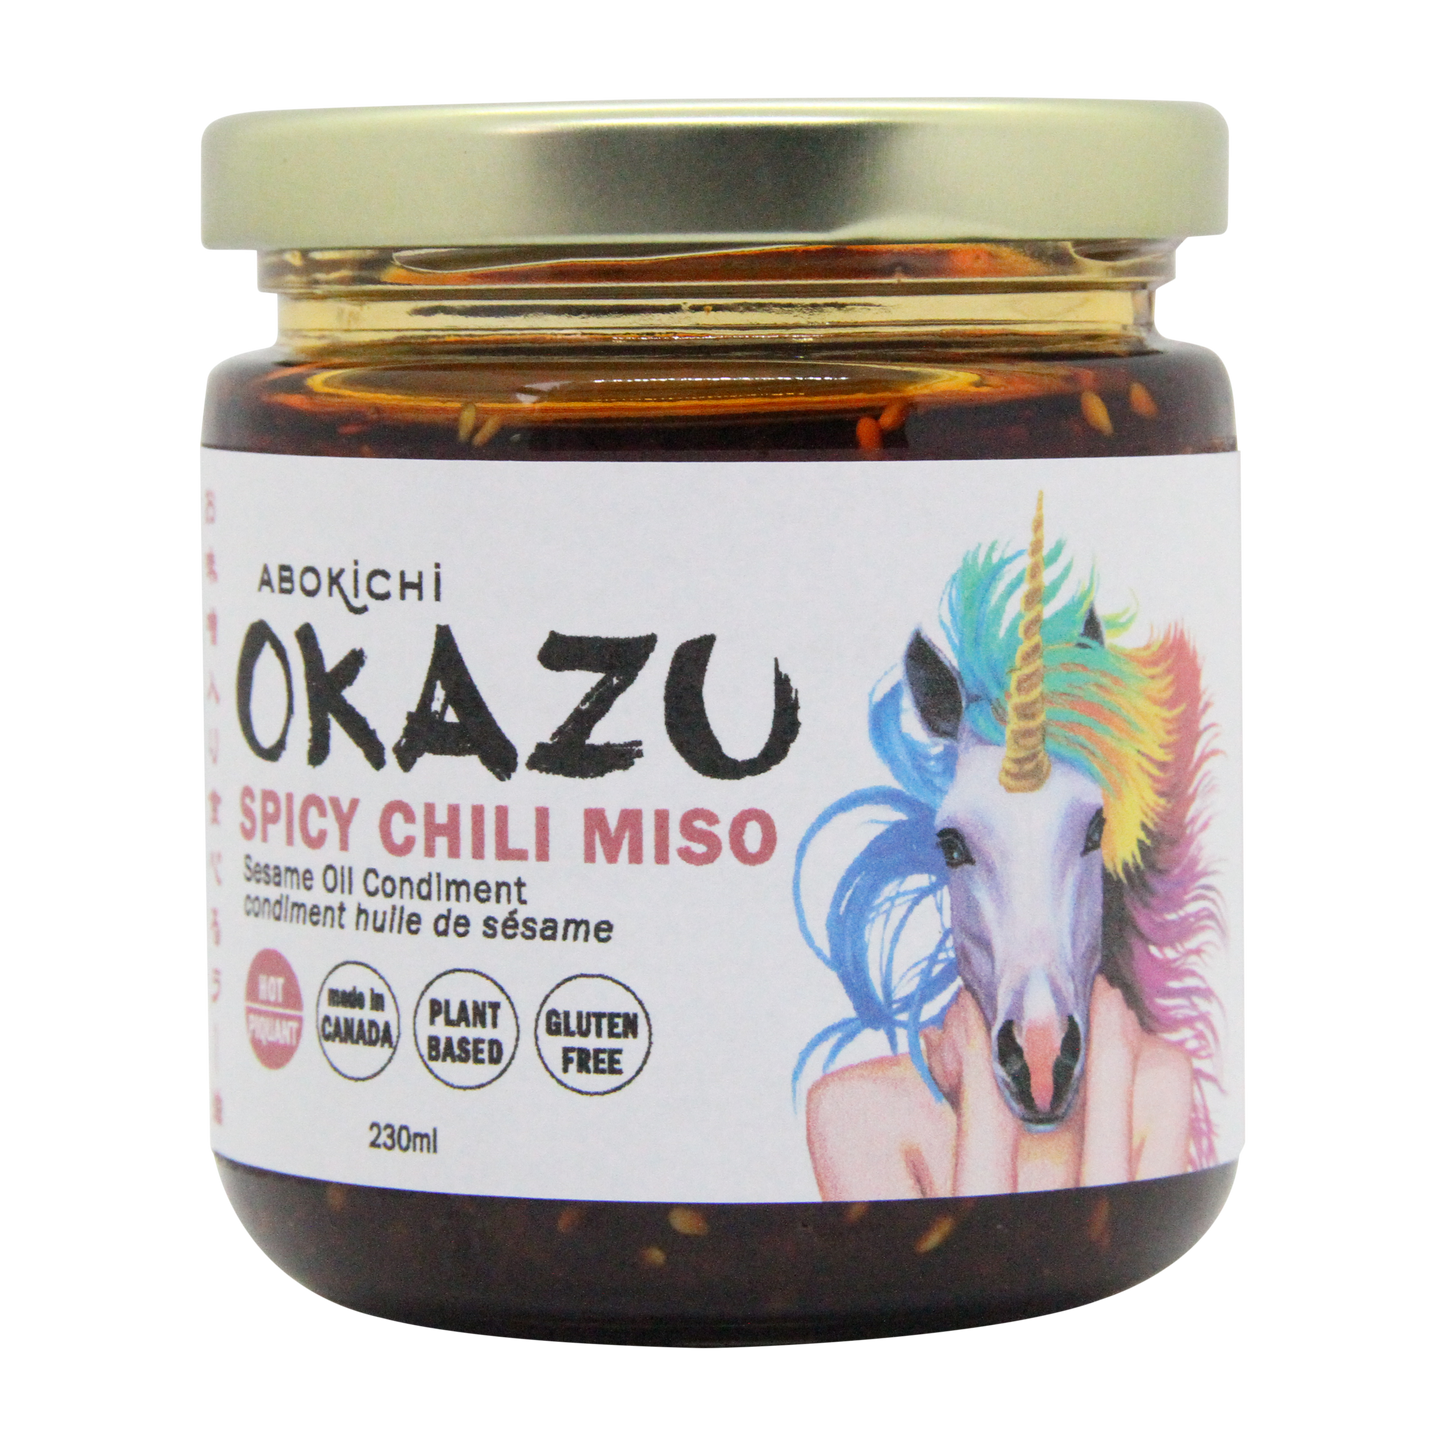 Tony Taylor OKAZU Spicy Chili miso - Japanese miso chili oil condiment (230ml/8oz)